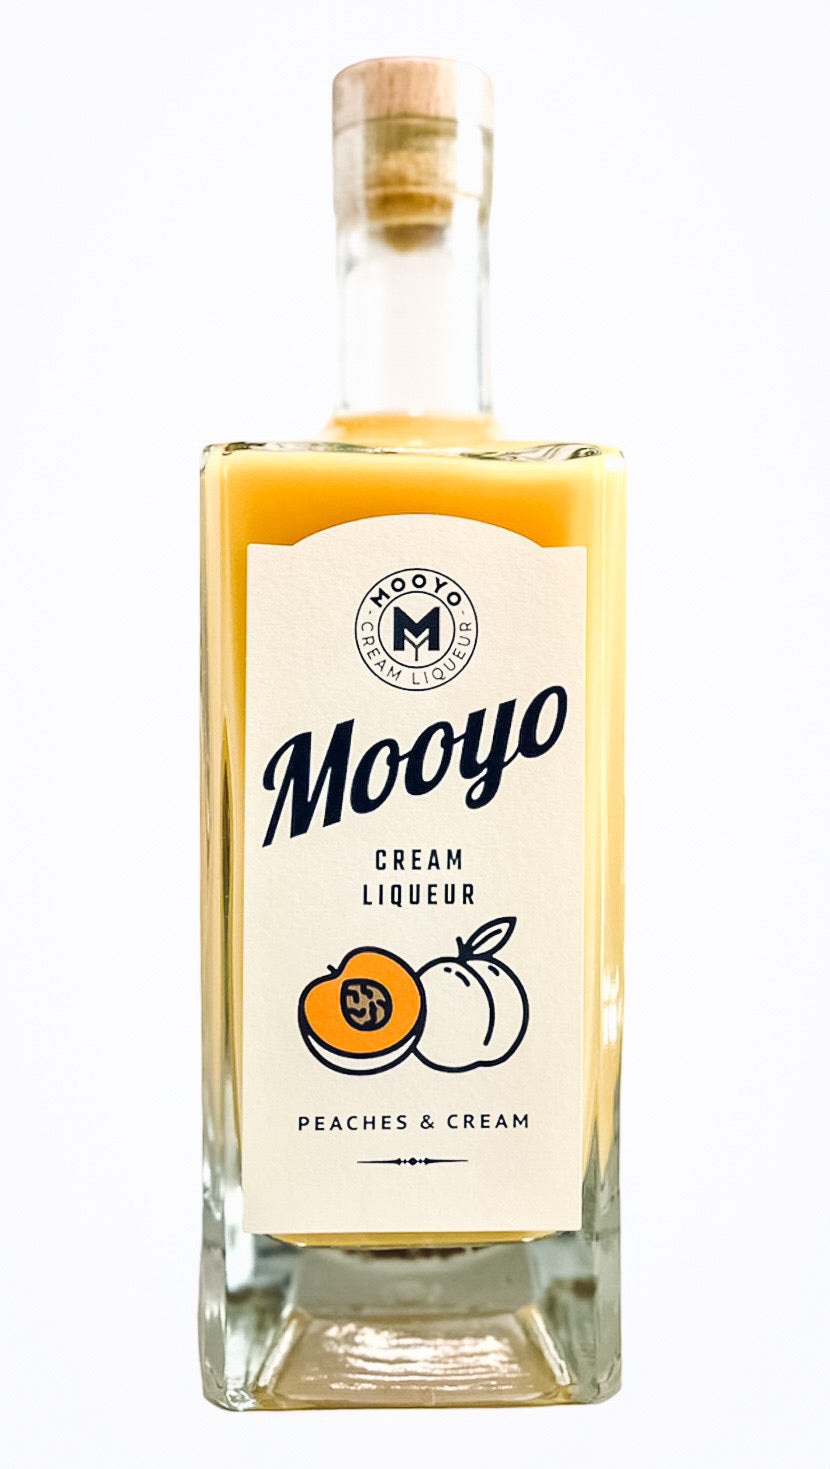 Mooyo - Peaches & Cream 70cl